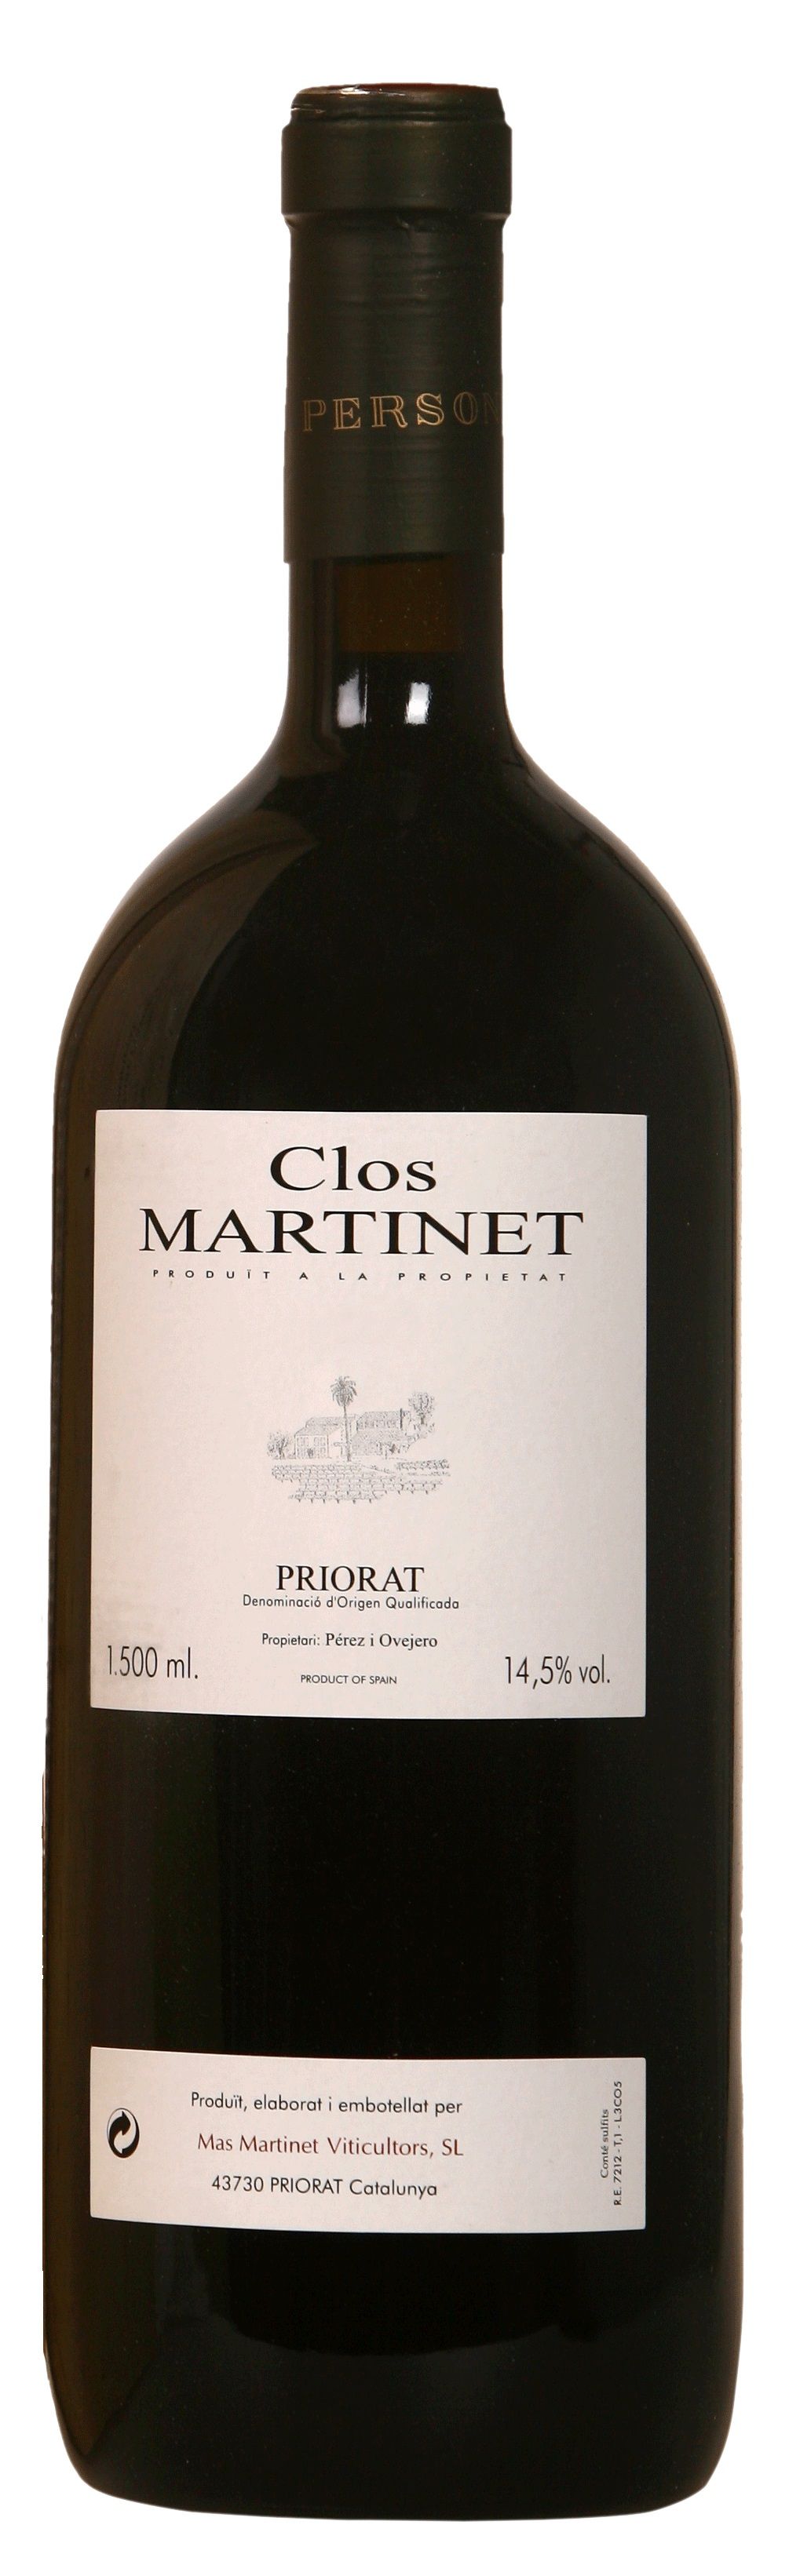 Mas Martinet, Clos Martinet, 2006